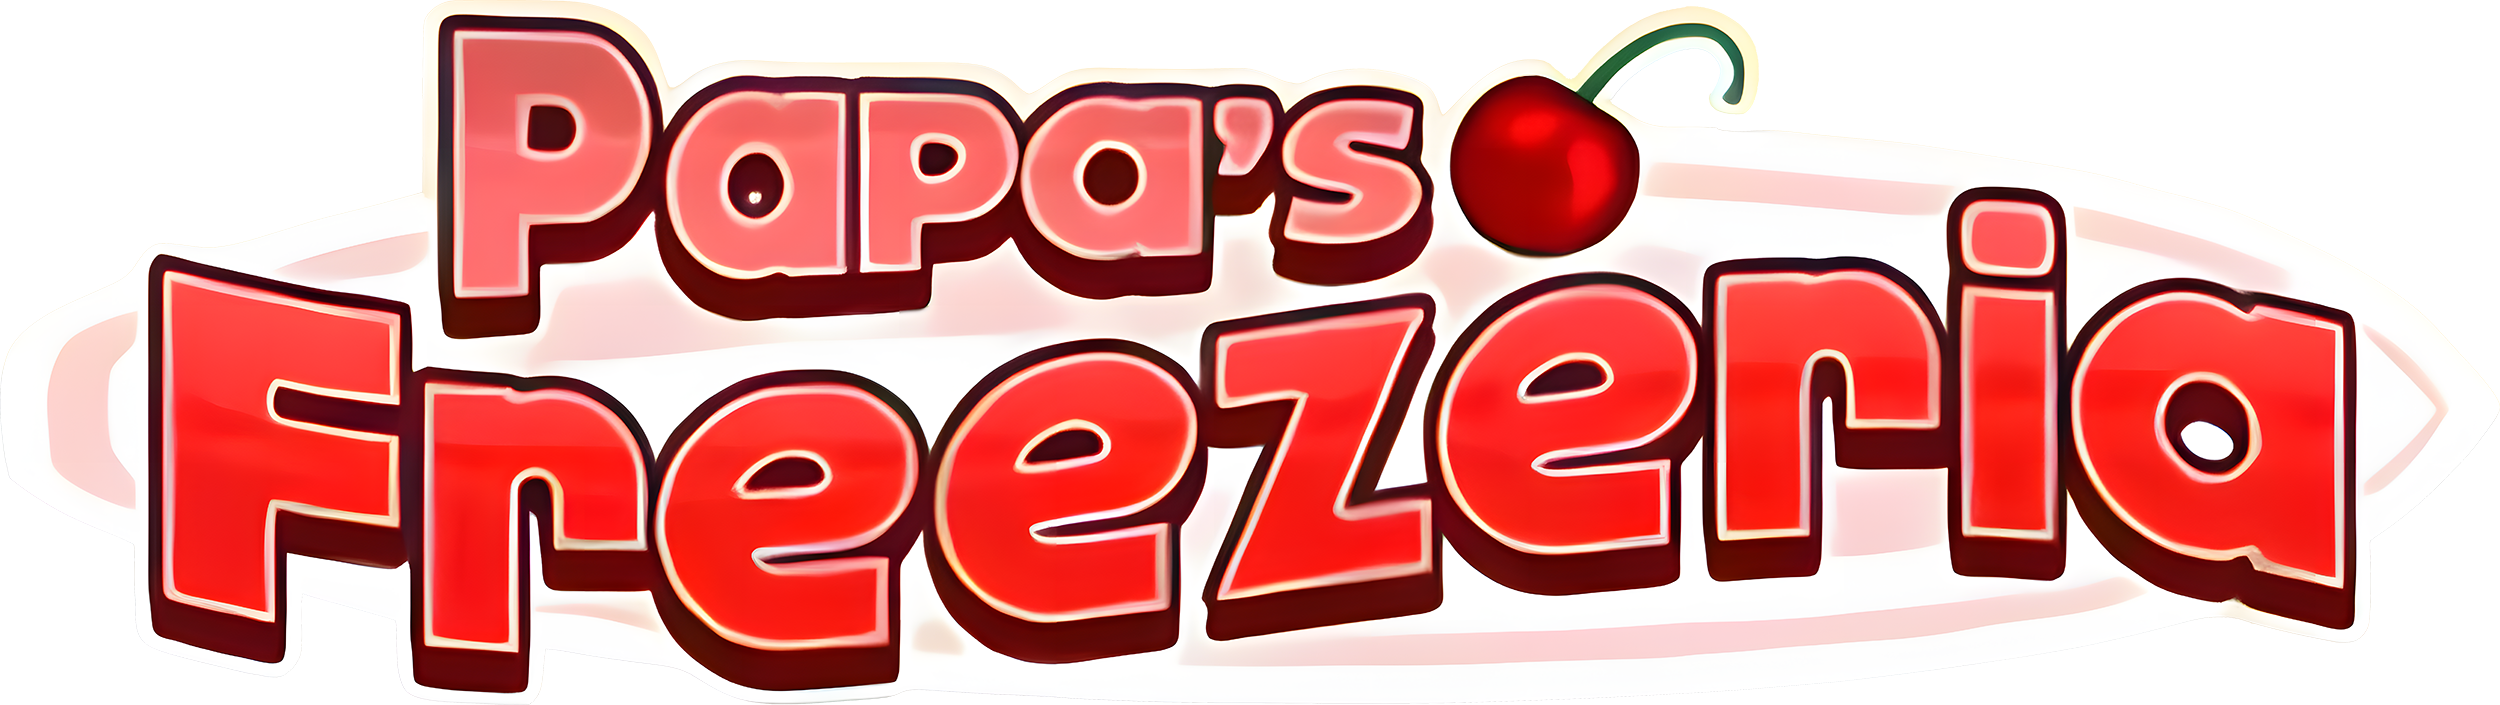 Logo for Papa's Freezeria by BasedBall